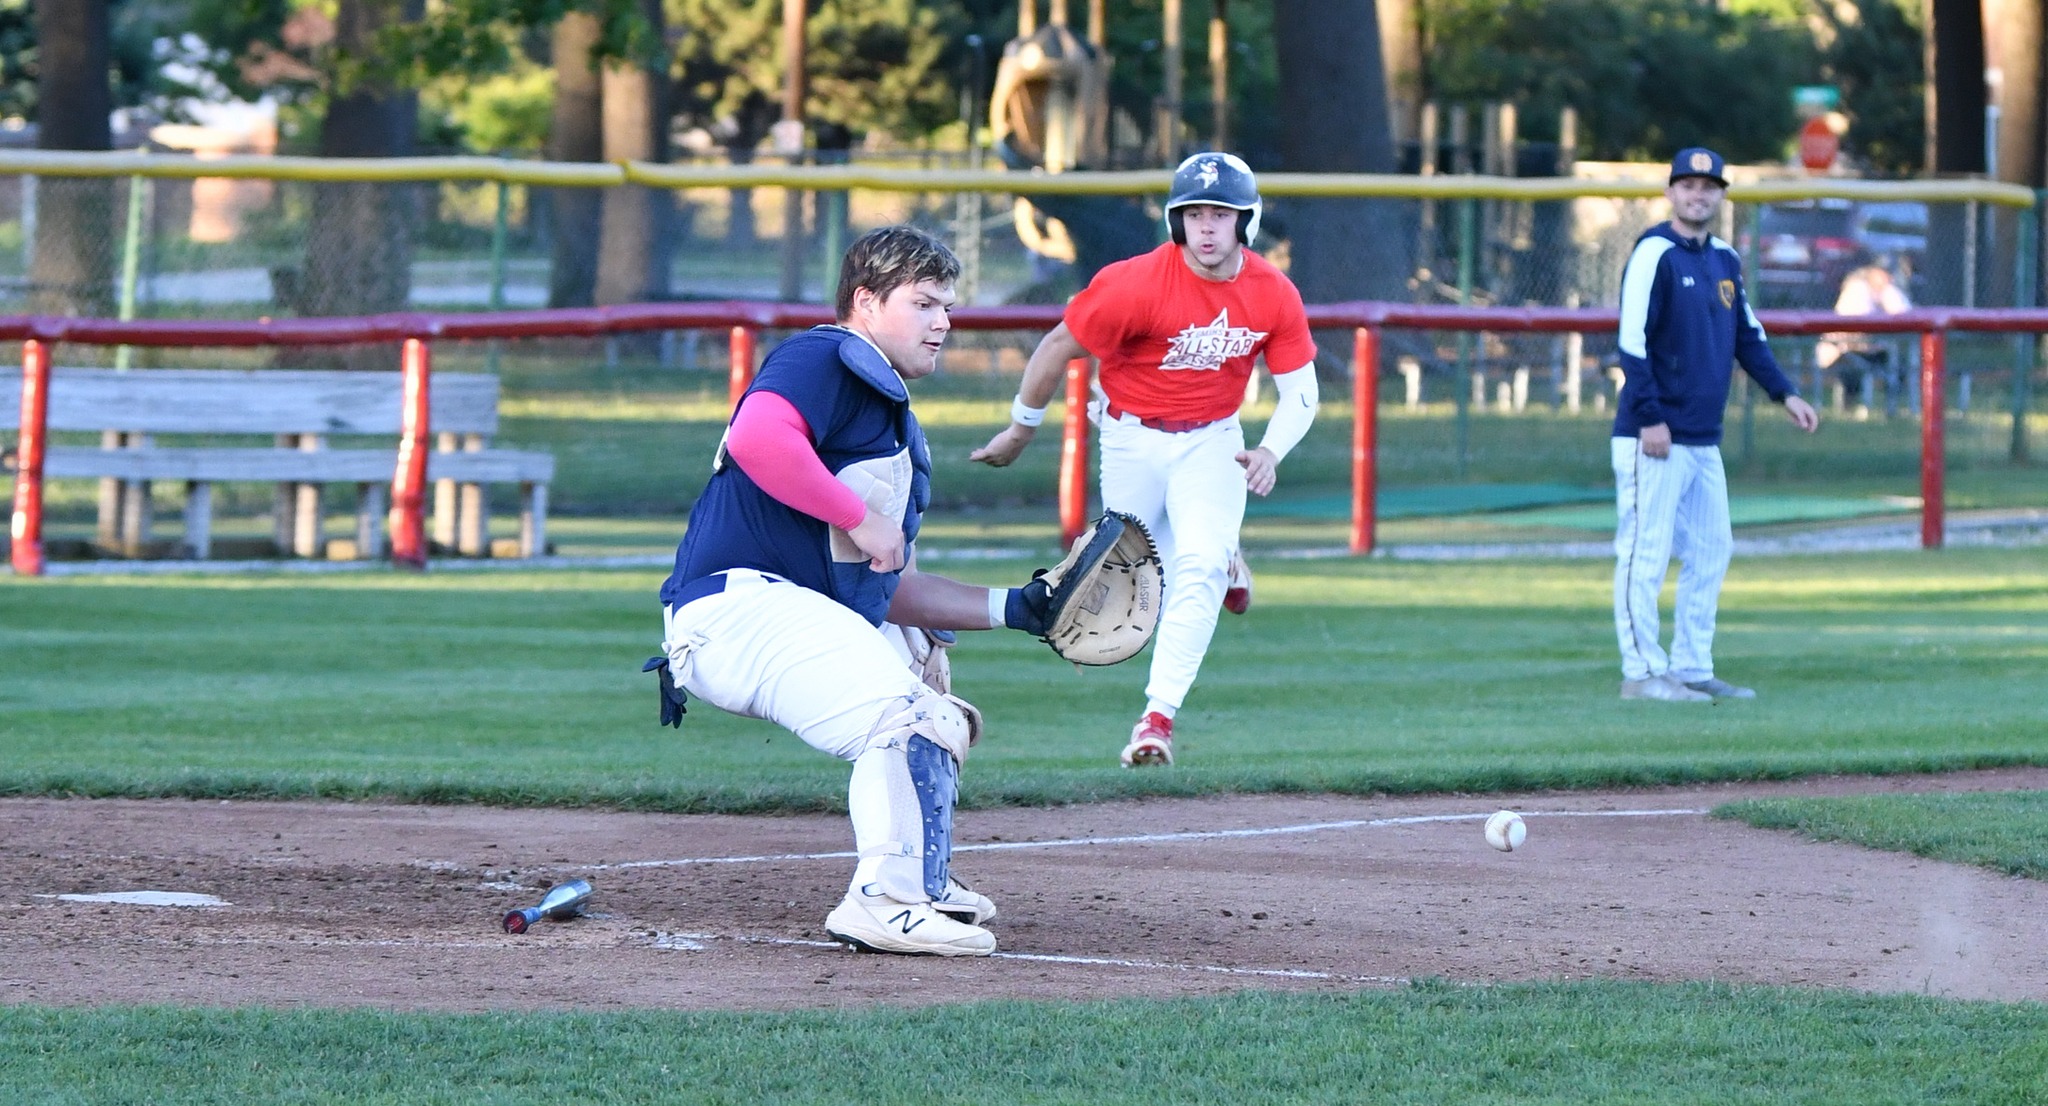 Area’s senior stars shine in all-star baseball classic at Marsh Field